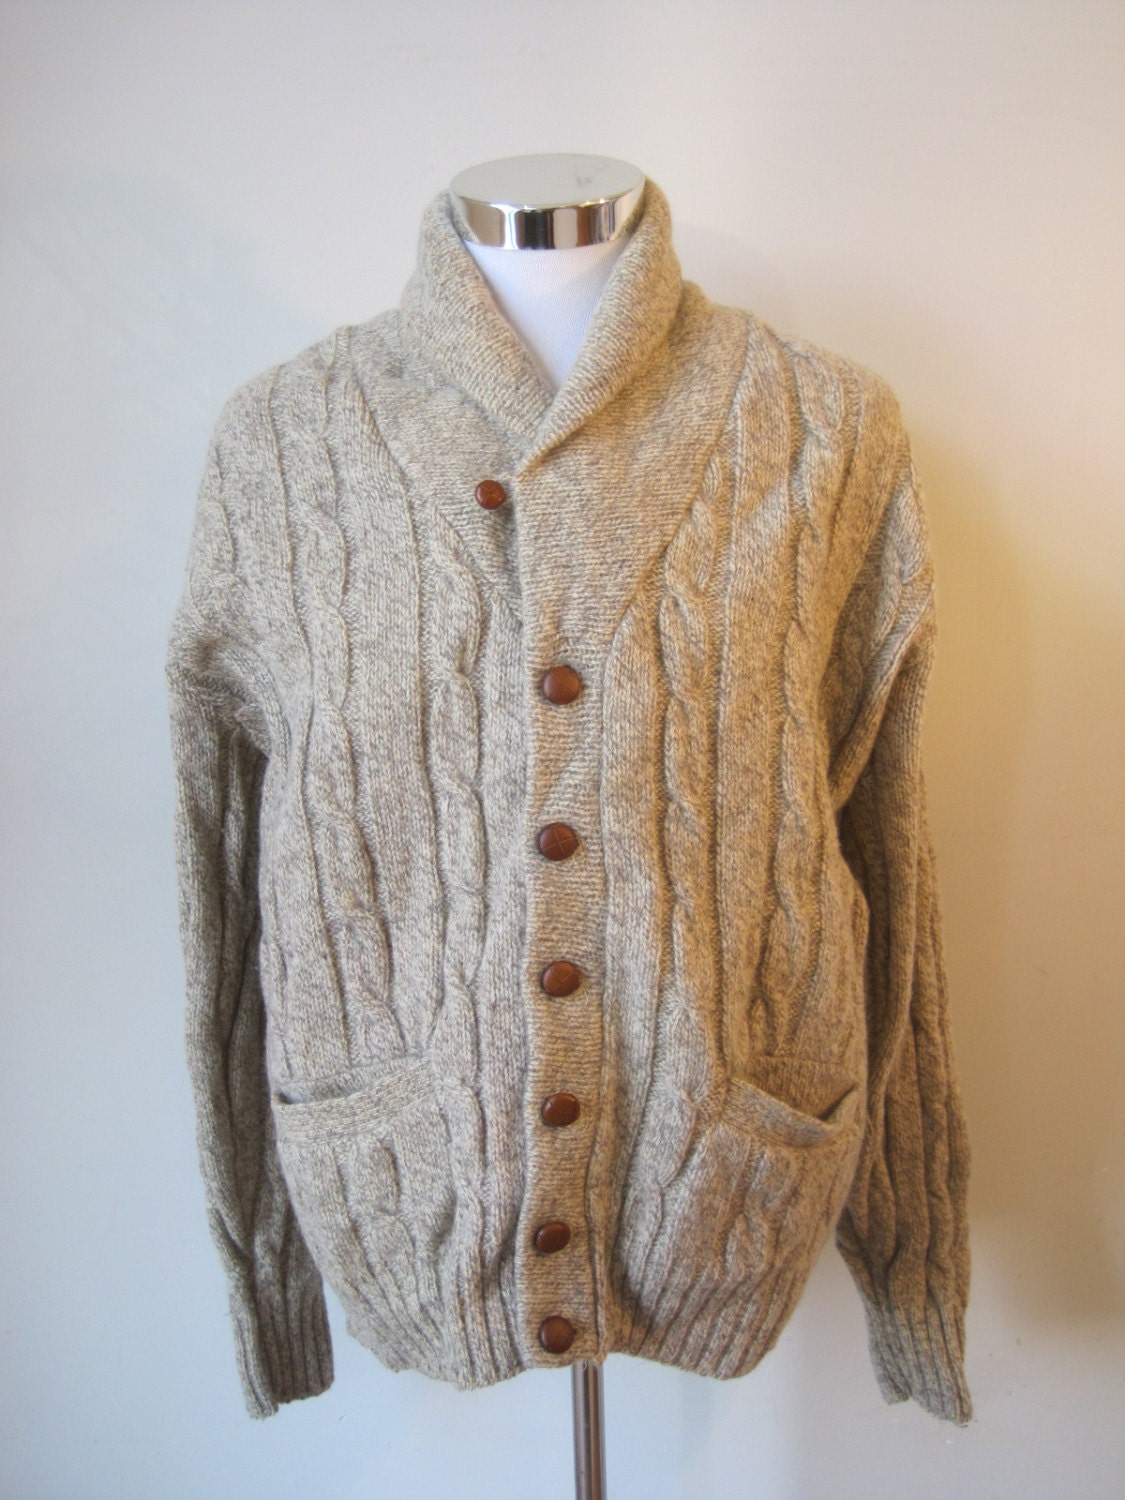 EDDIE BAUER Sweater Cardigan Fisherman Size: M Mens Wool by Elsu76